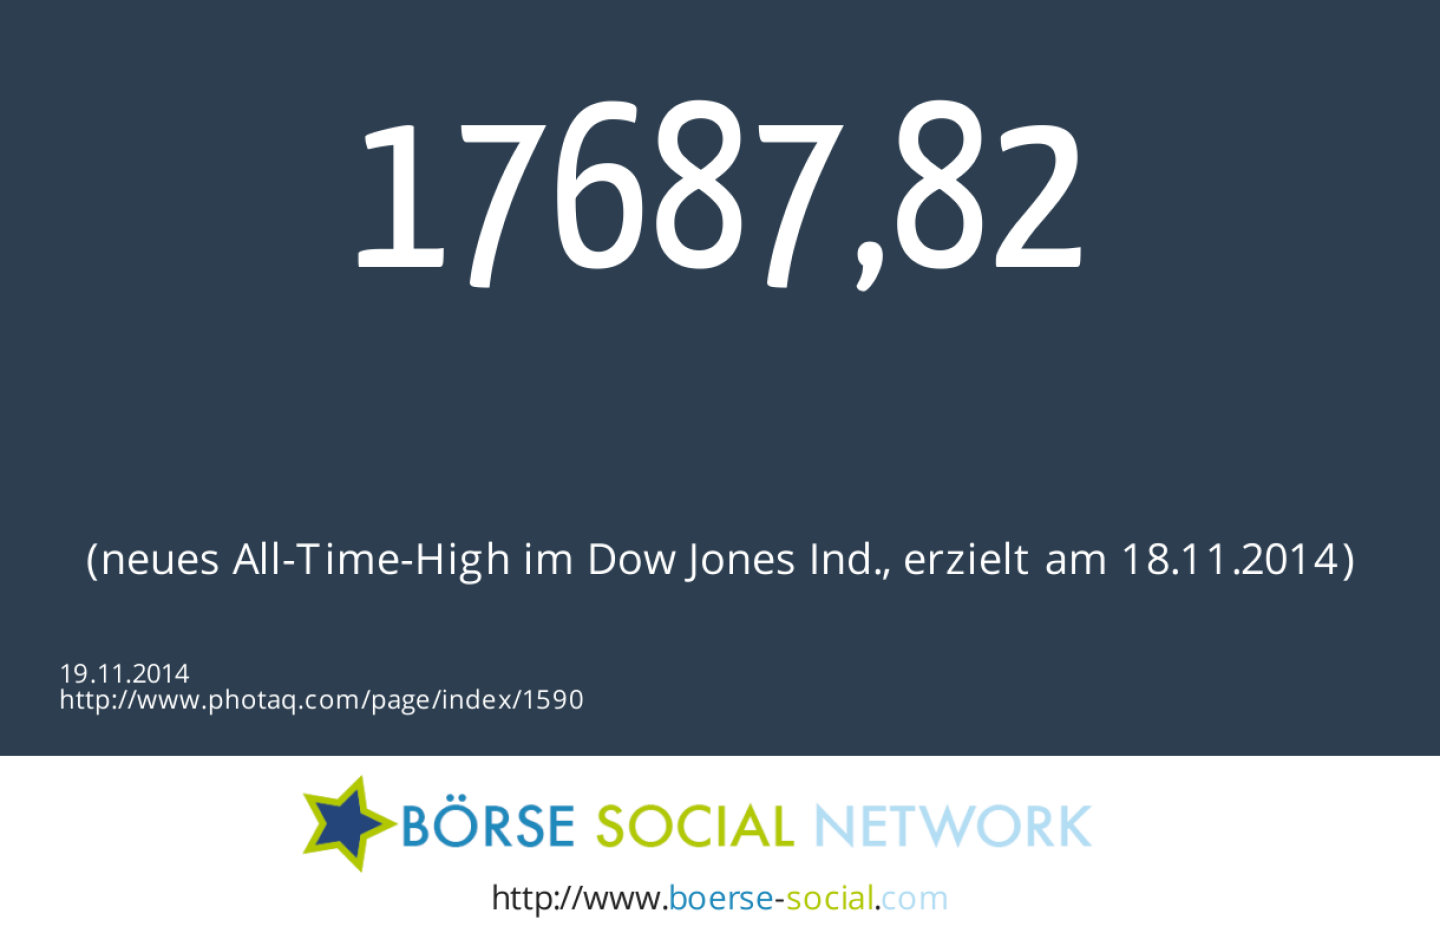 17687,82 Punkte (neues All-Time-High im Dow Jones Ind., erzielt am 18.11.2014)